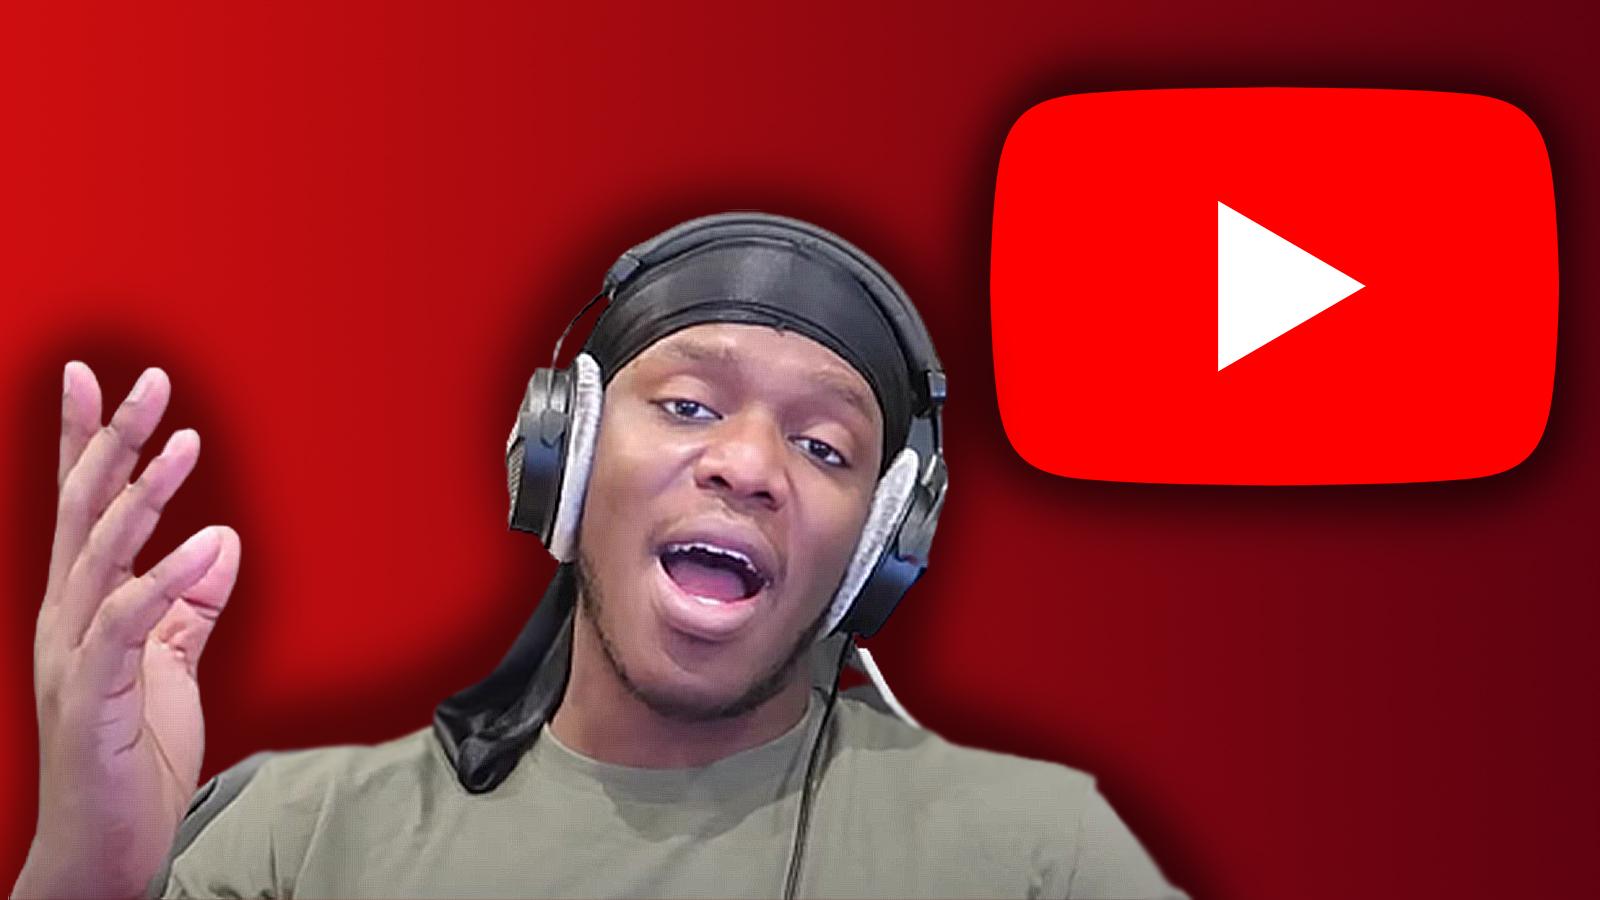 KSI explains YouTube ban